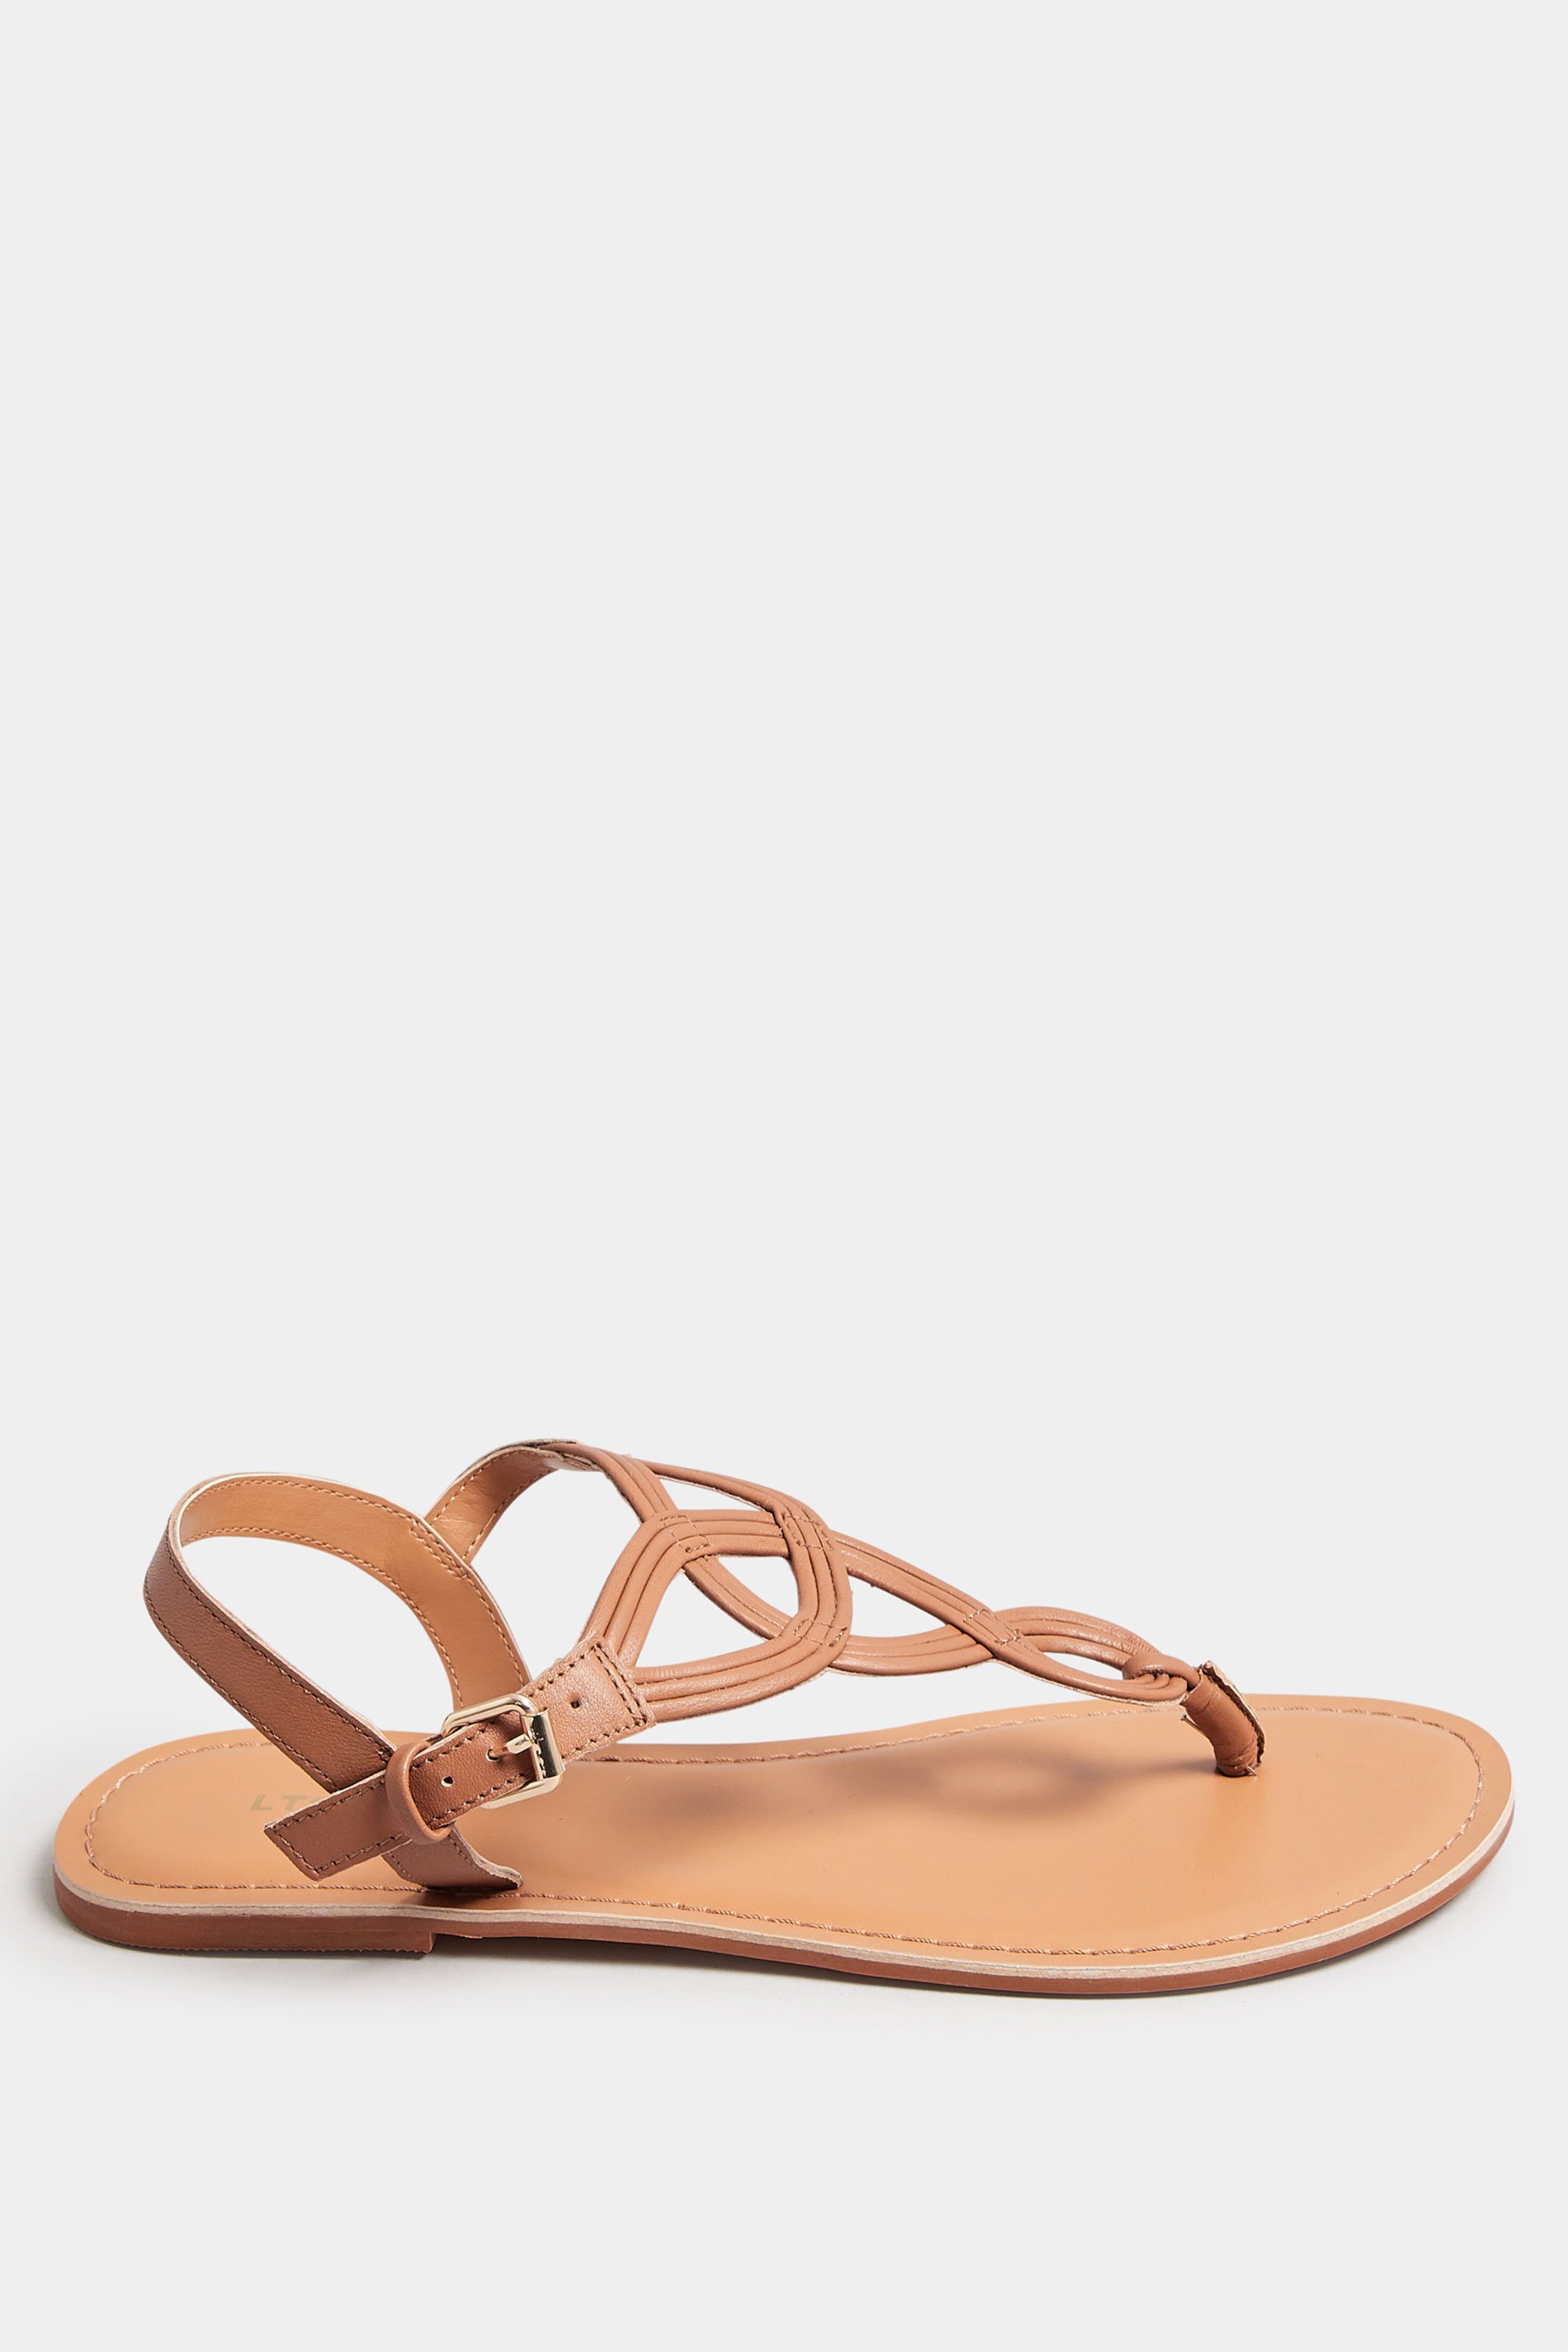 LTS Tan Brown Leather Swirl Toe Post Flat Sandals In Standard Fit | Long Tall Sally 3